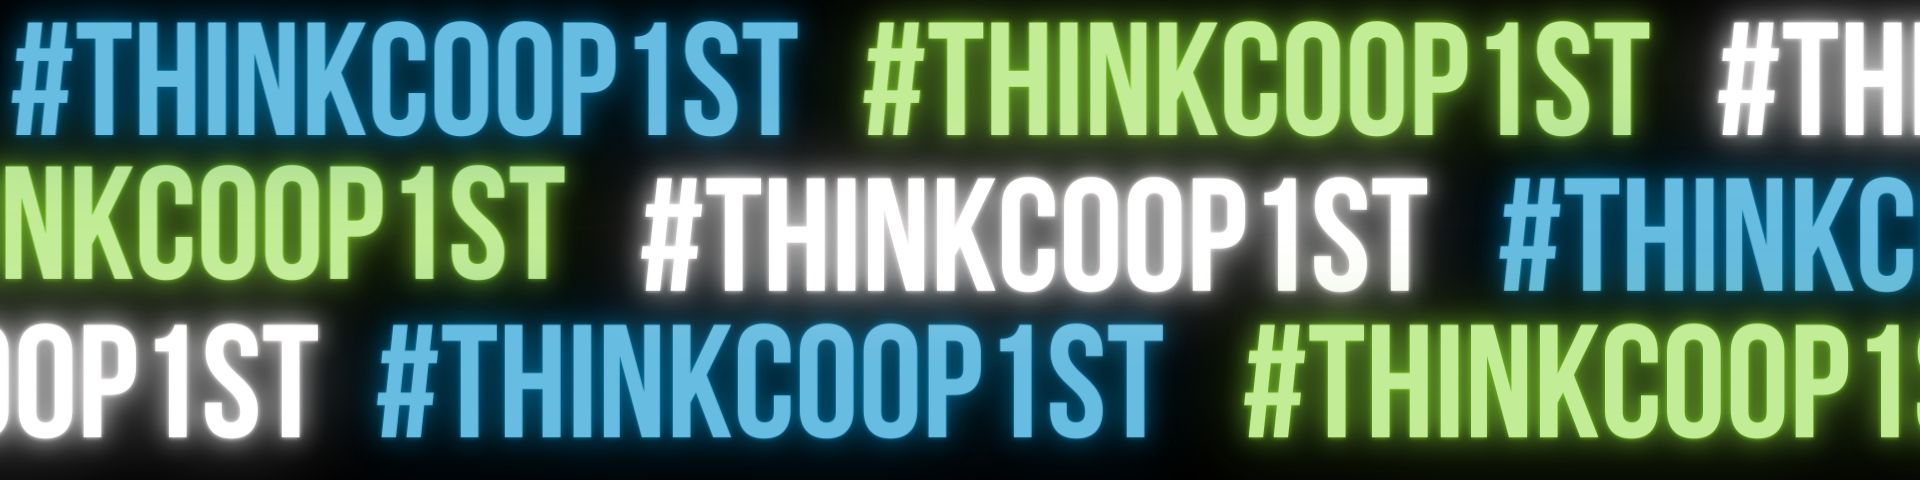 #thinkcoop1st